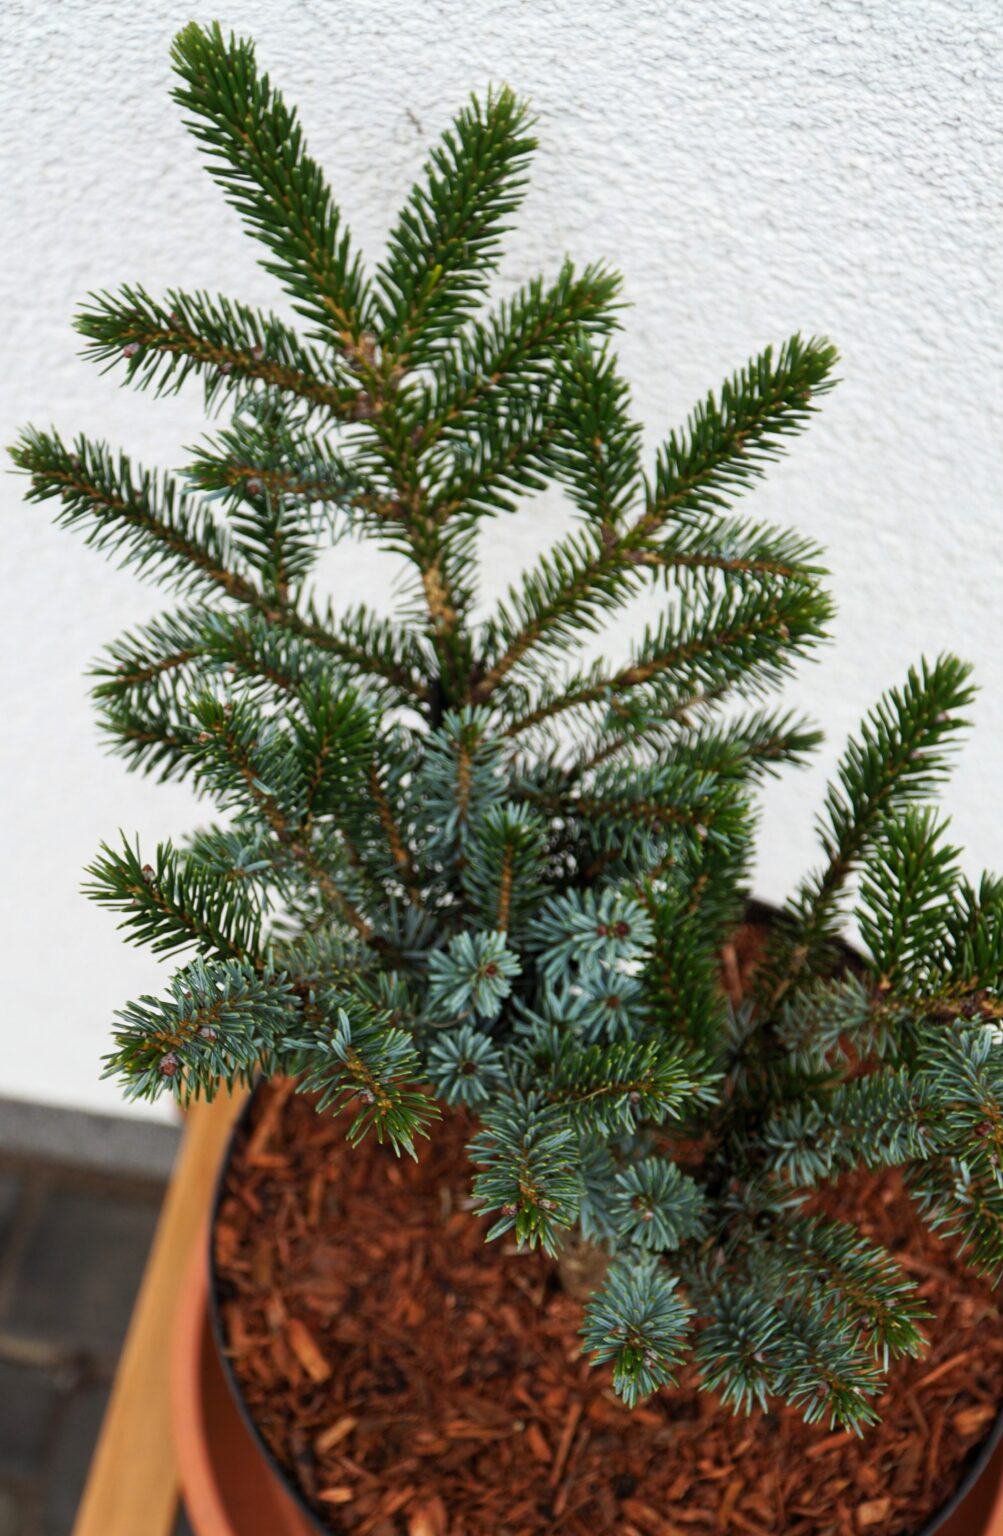 ŚWIERK DWUBARWNY HOWELL'S DWARF Picea bicolor